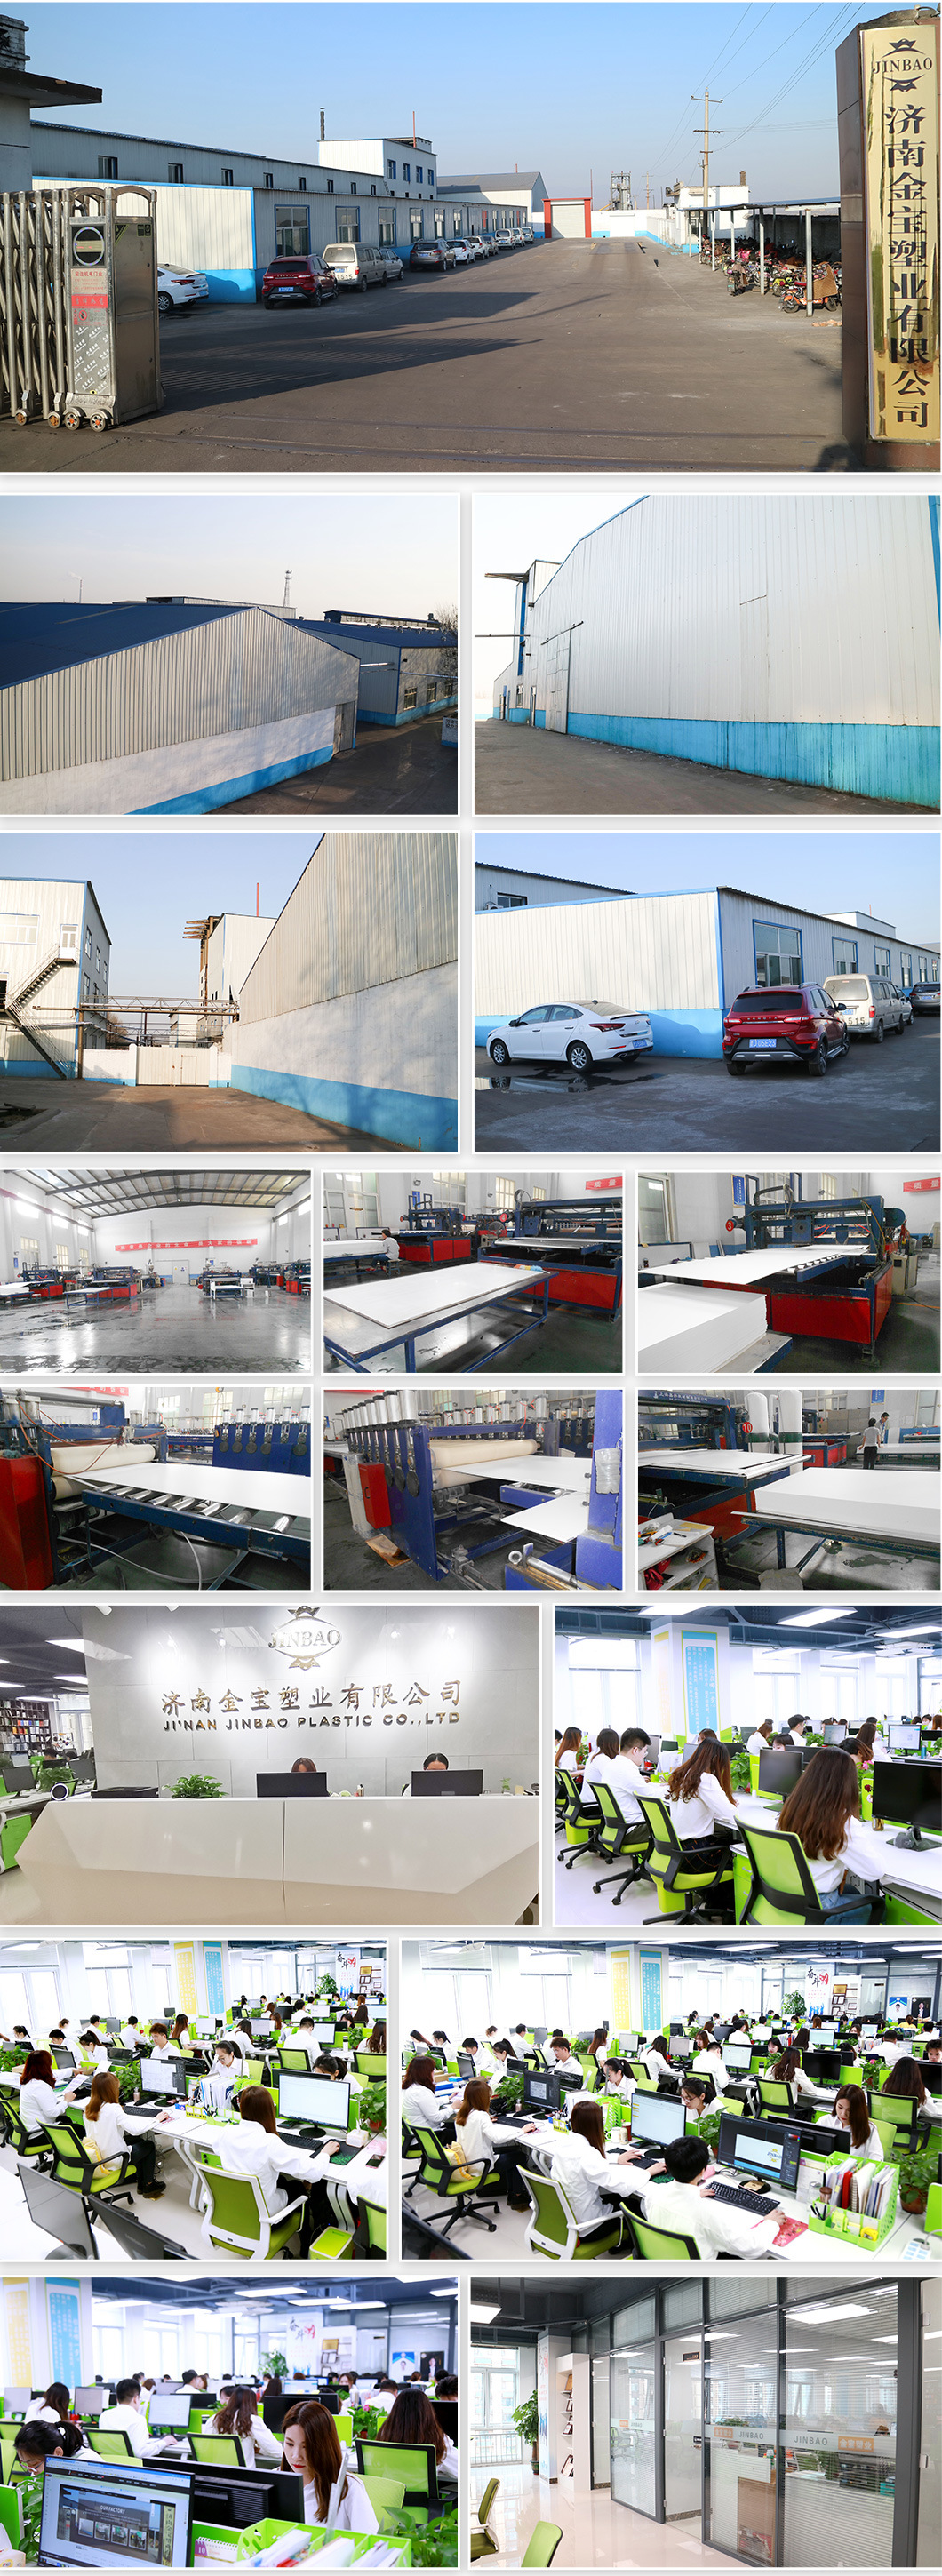 Jinbao White Rigid Plate Waterproof PVC Sheet Formwork Free Plastic Board Thermoforming Polyurethane Foam Prices 18mm